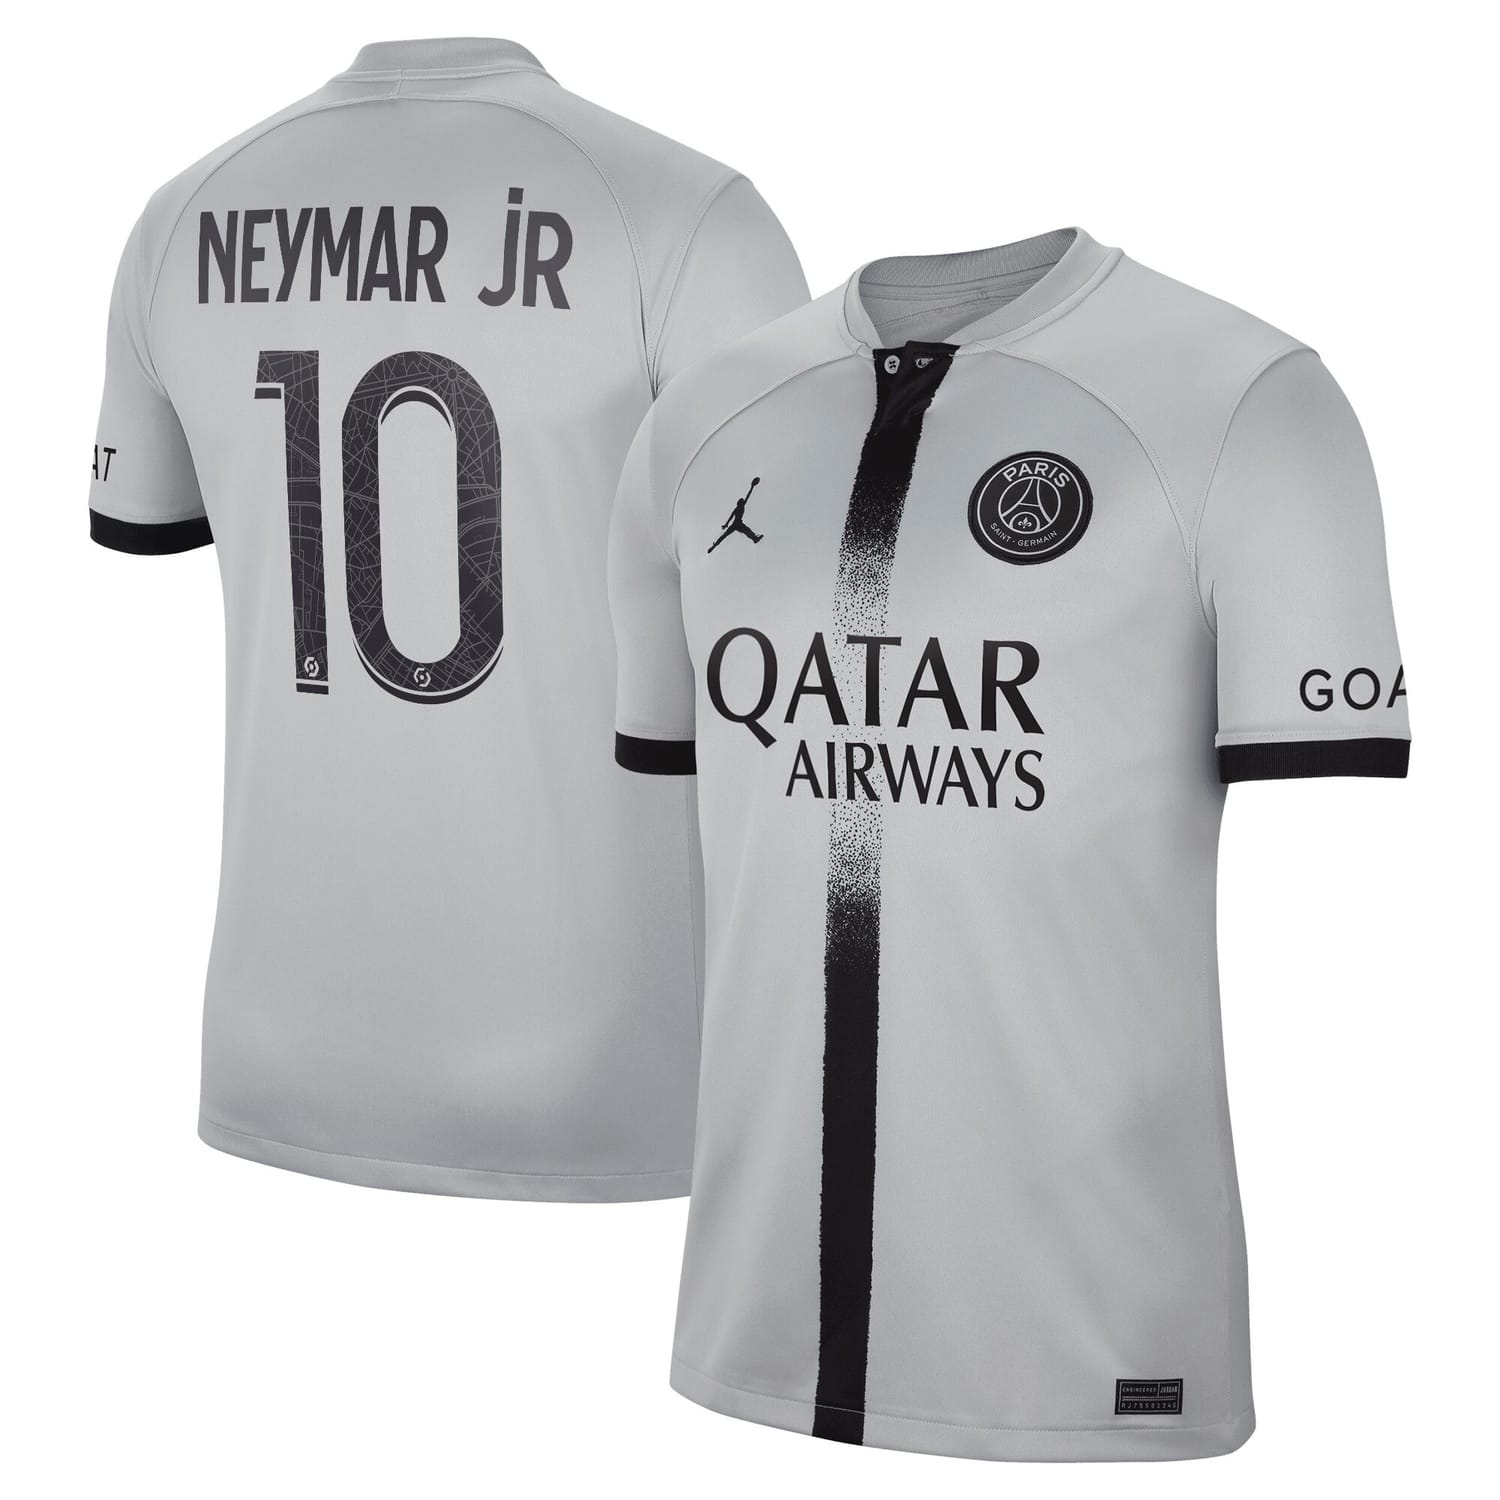 Ligue 1 Paris Saint-Germain Away Jersey Shirt 2022-23 player Neymar Jr. 10 printing for Men